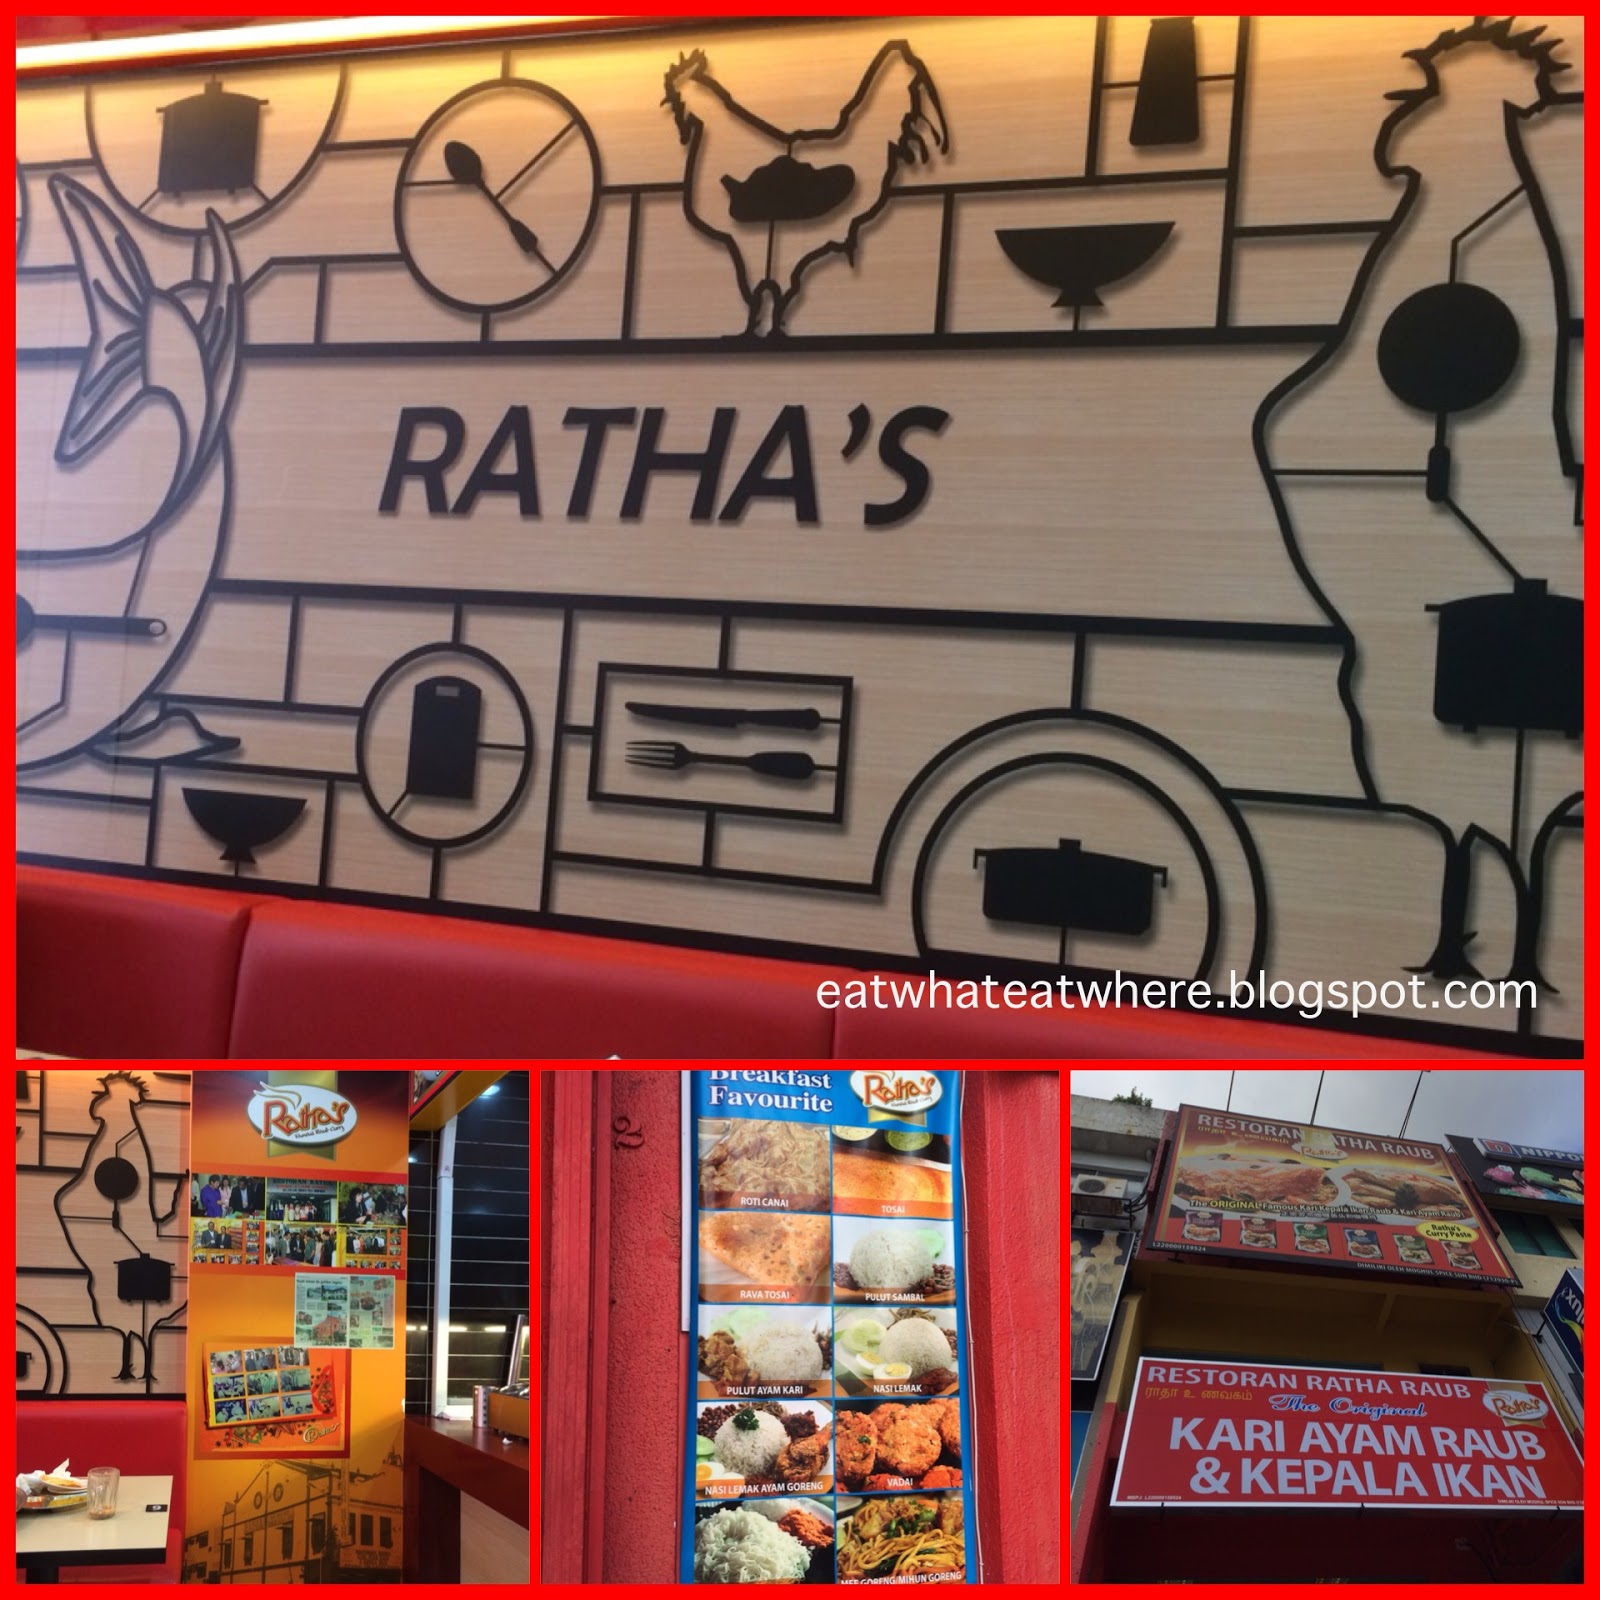 Ratha curry house